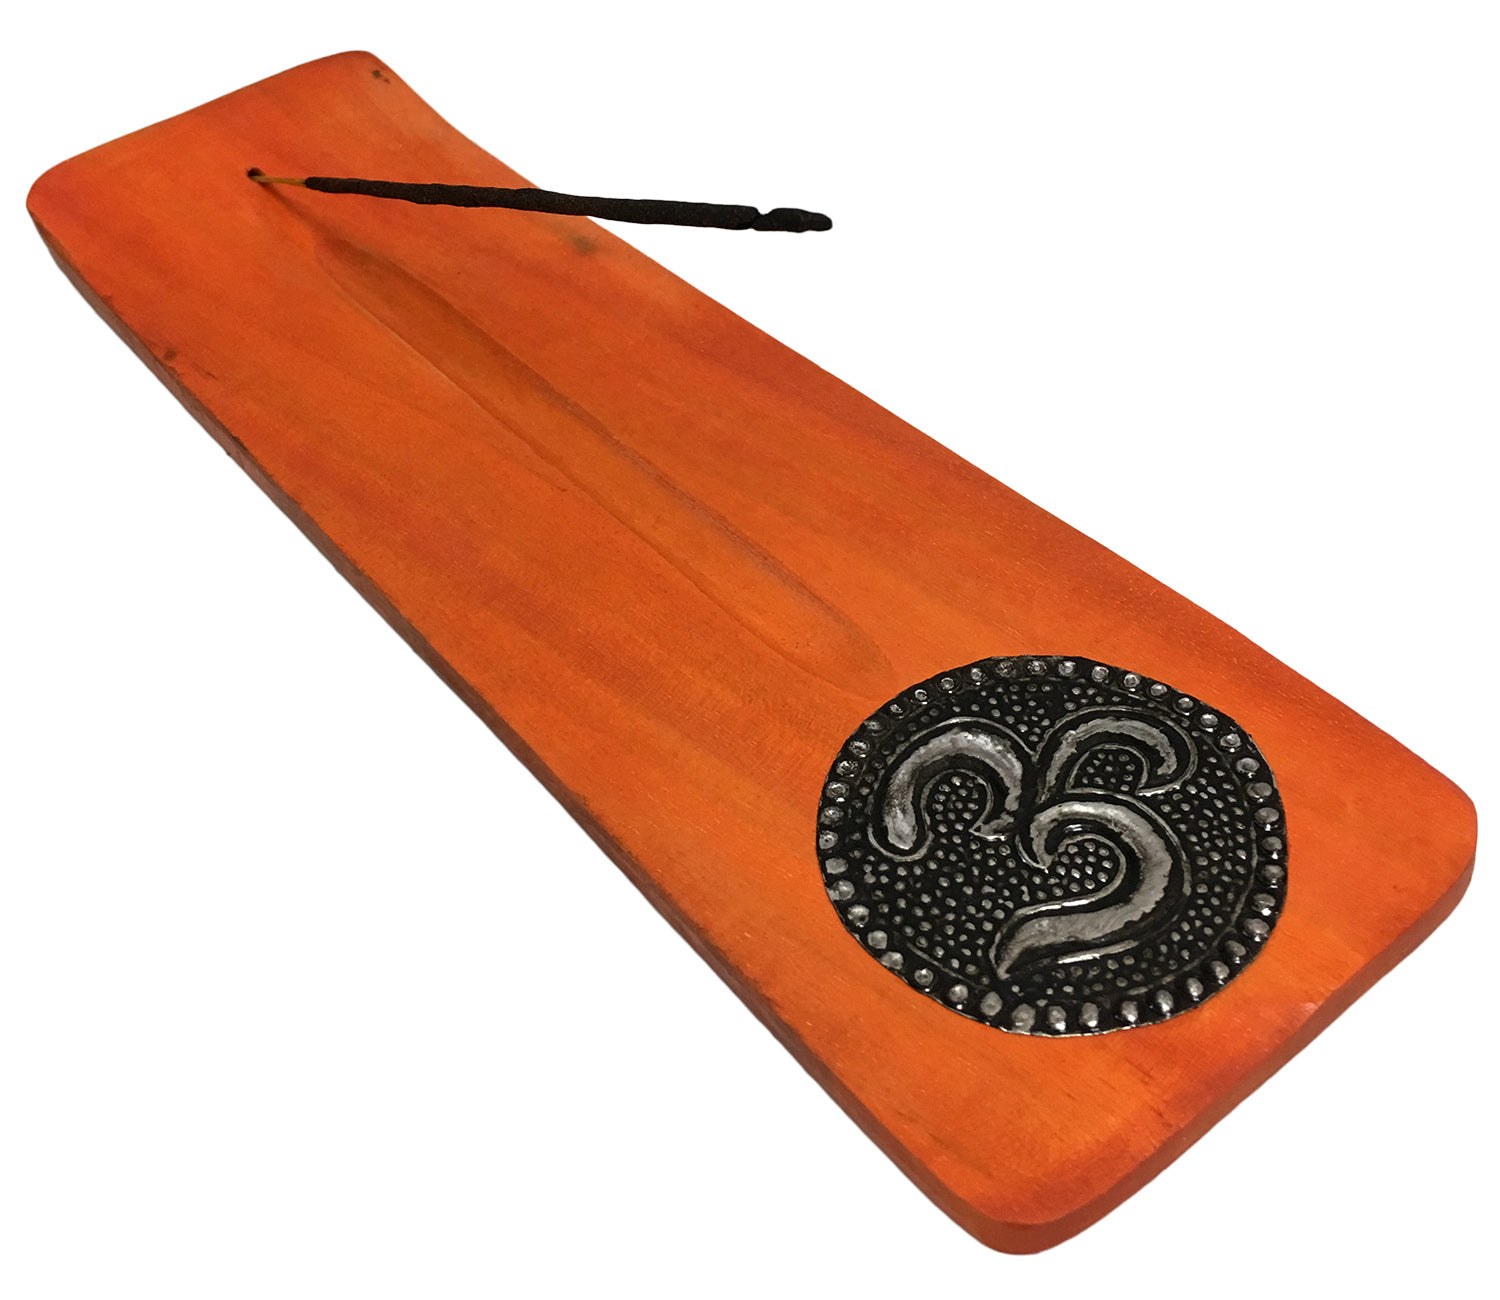 Aromatherapy Wood Om Incense Stick Holder, Burner, & Ash Catcher - Ambali Fashion Incense accessory, bohemian, classic, eastern, ethnic, gypsy, hippie, incense, indian, meditation, nagchampa,